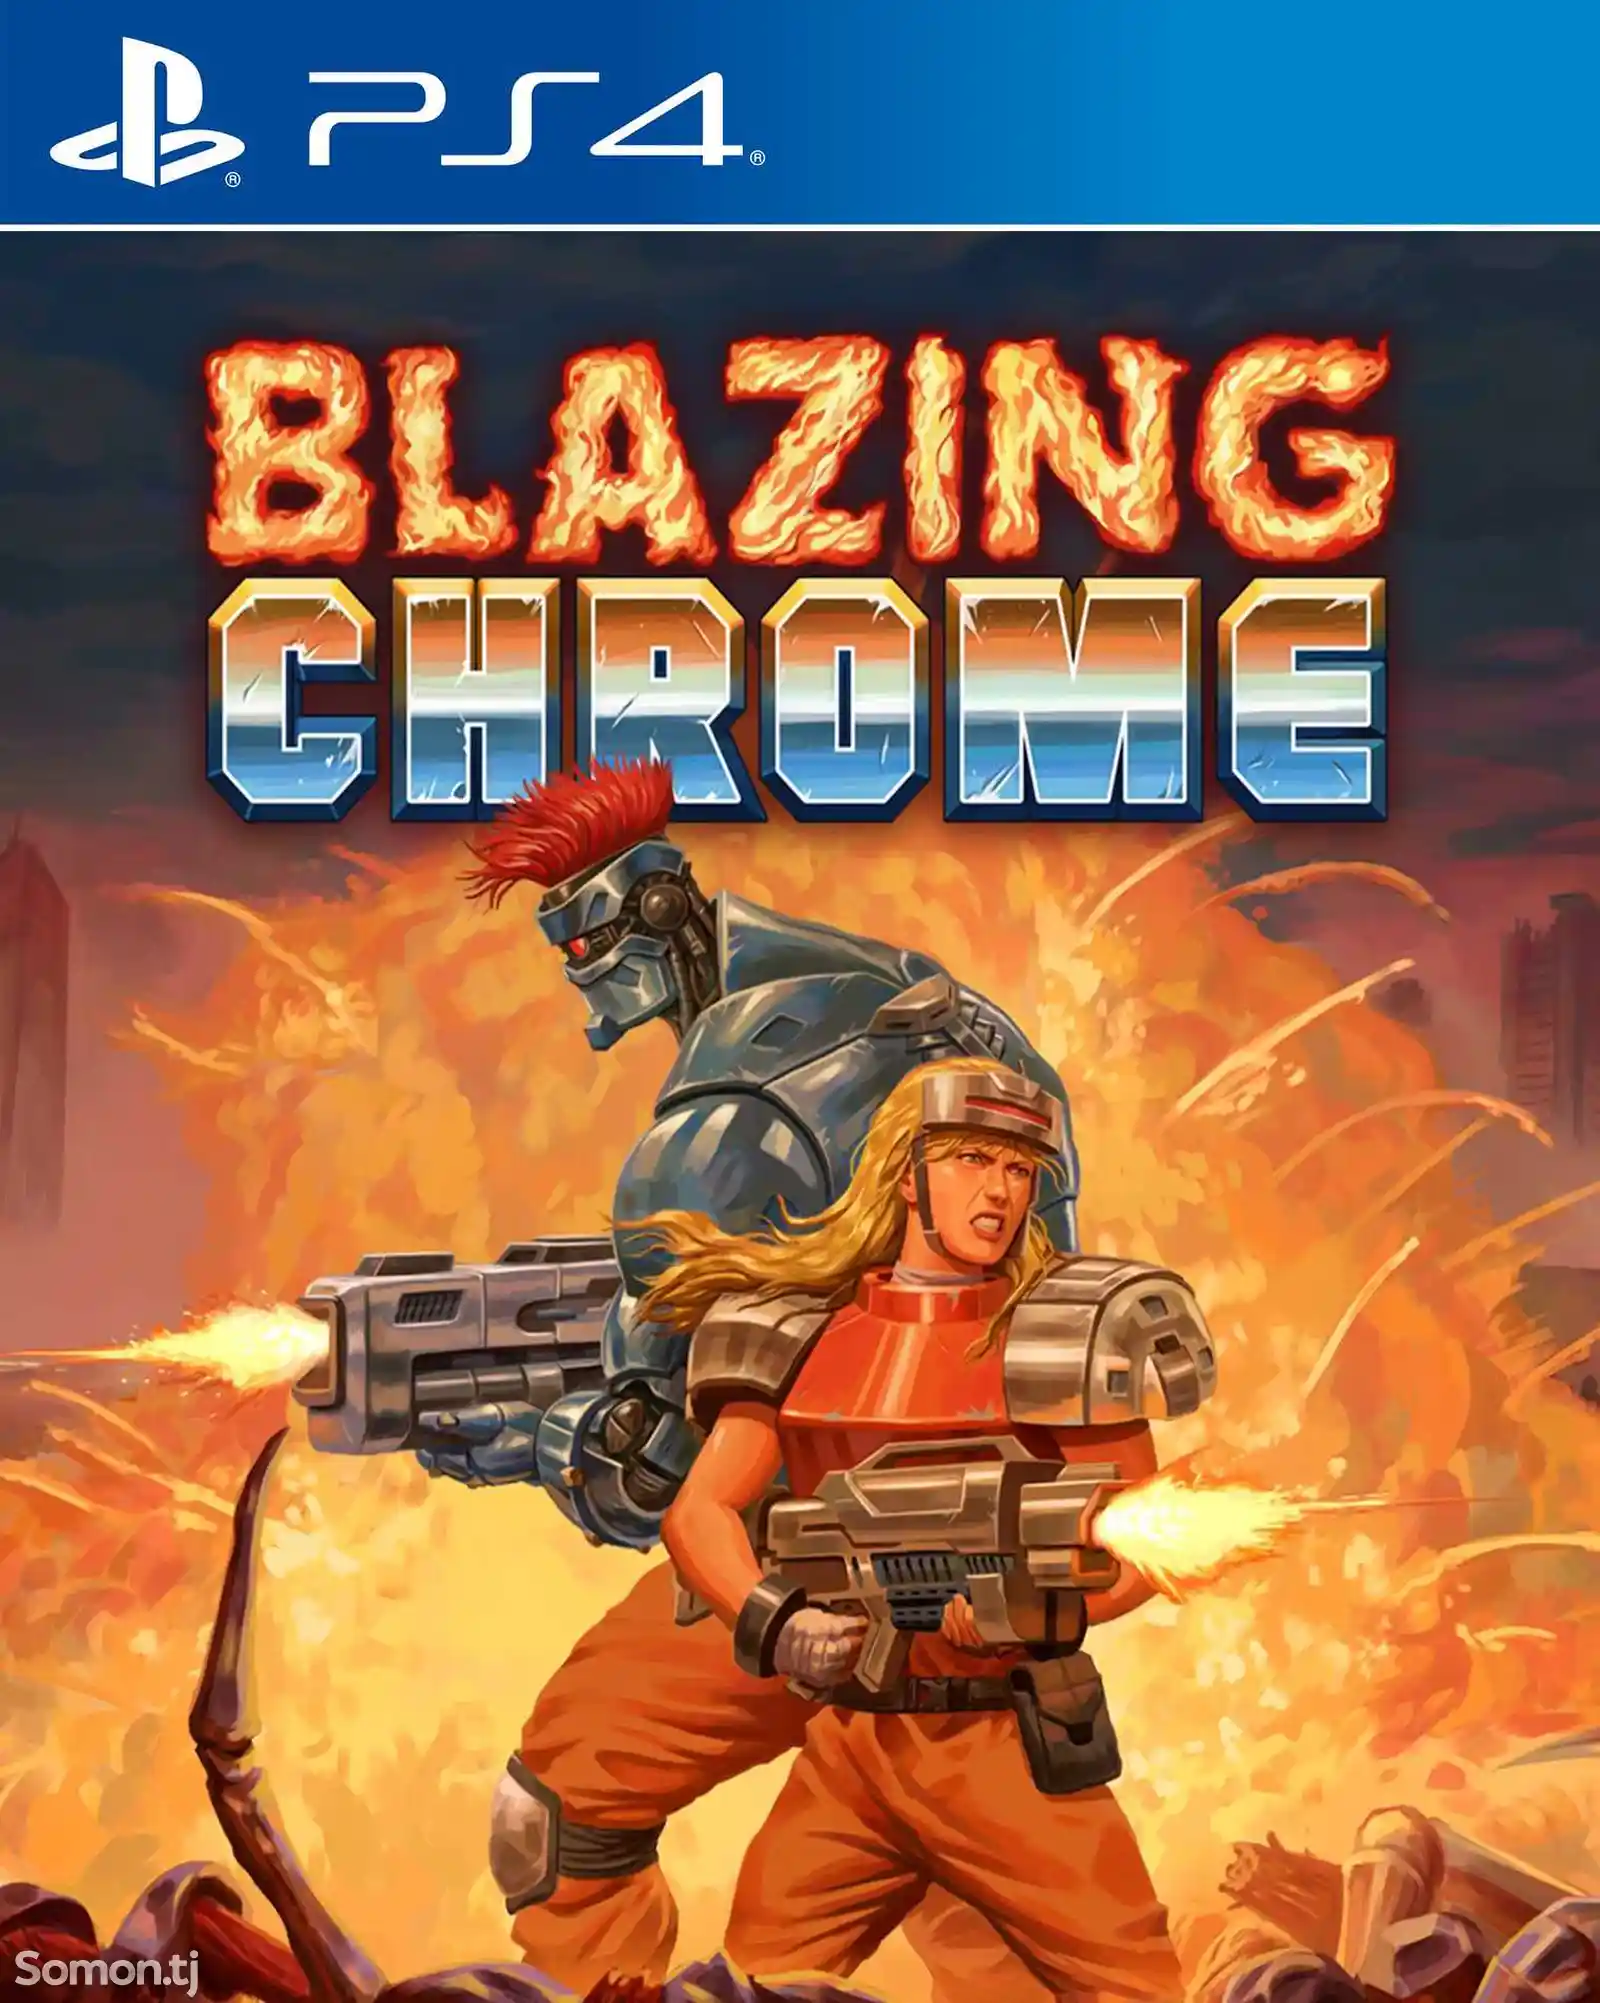 Игра Blazing chrome для PS-4 / 5.05 / 6.72 / 7.02 / 7.55 / 9.00 /-1